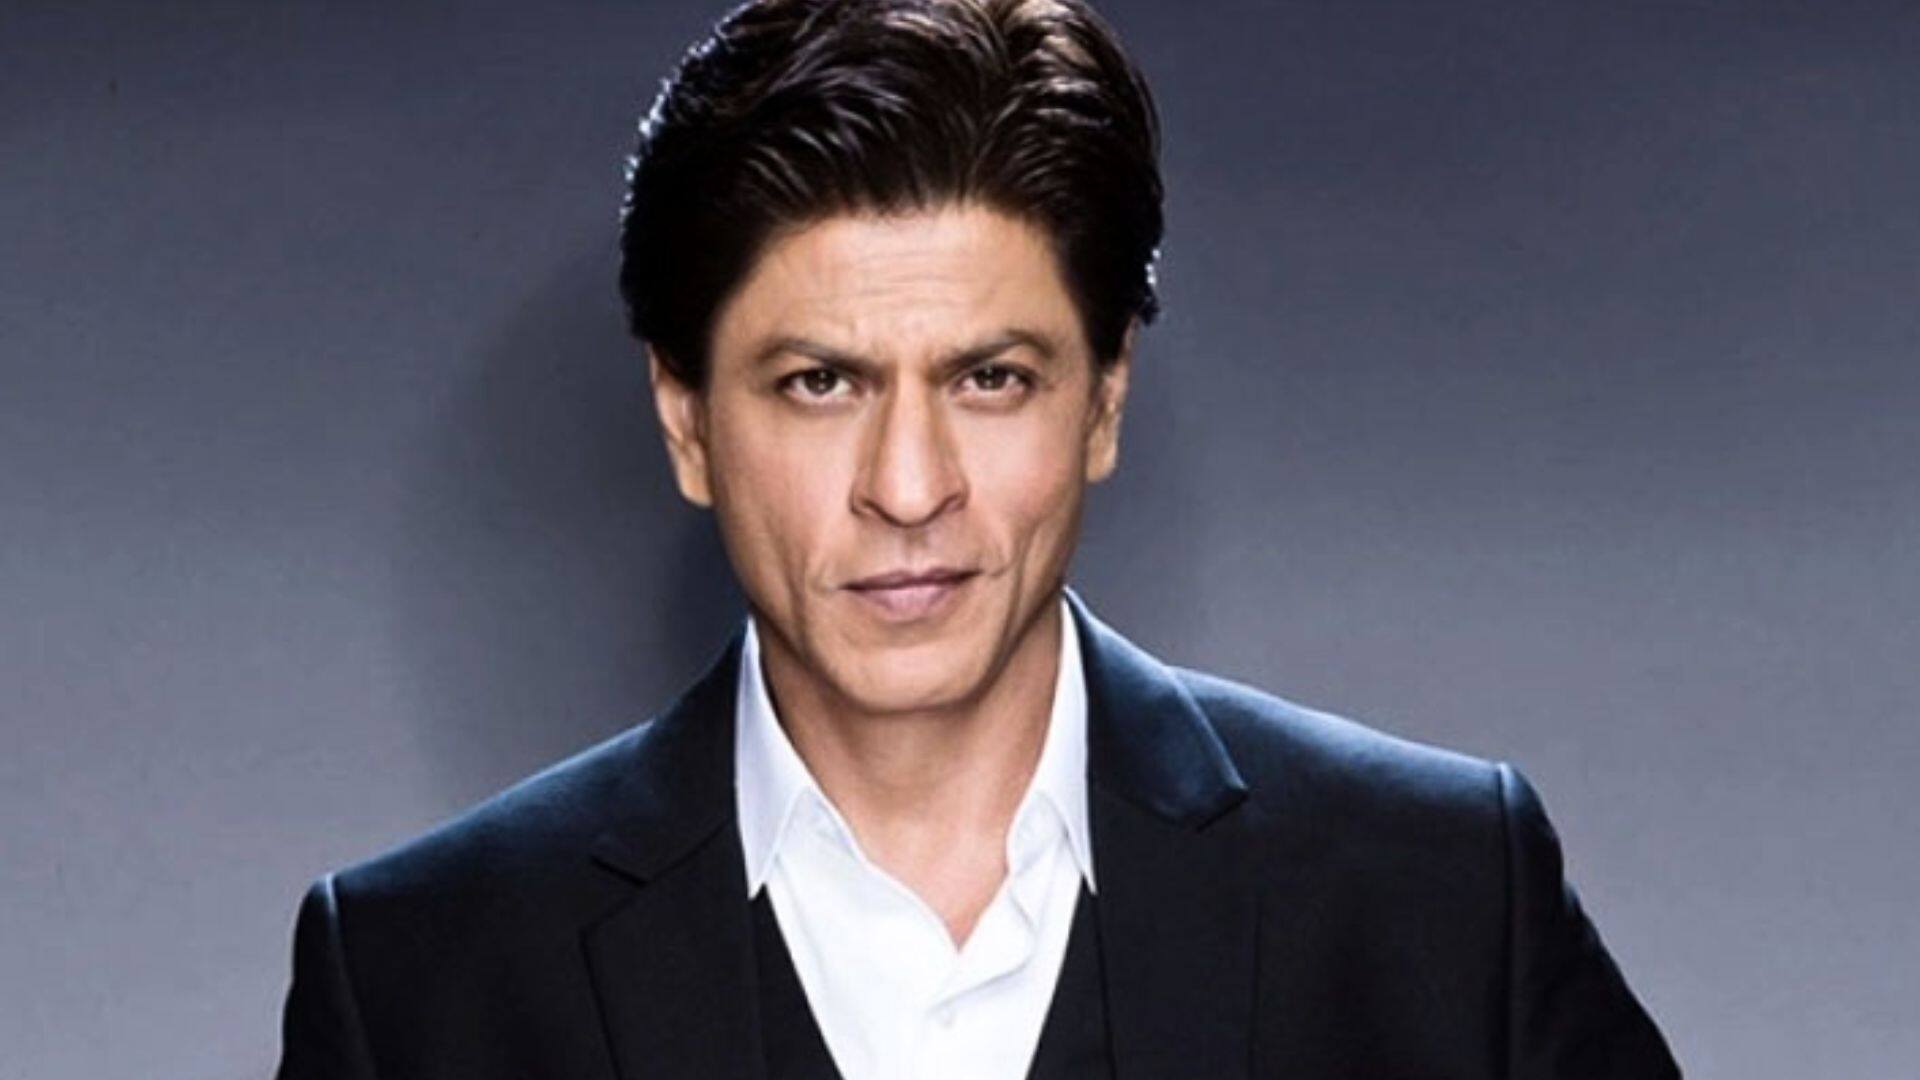 Shah Rukh Khan To Receive Pardo alla Carriera Award At Locarno Film Festival